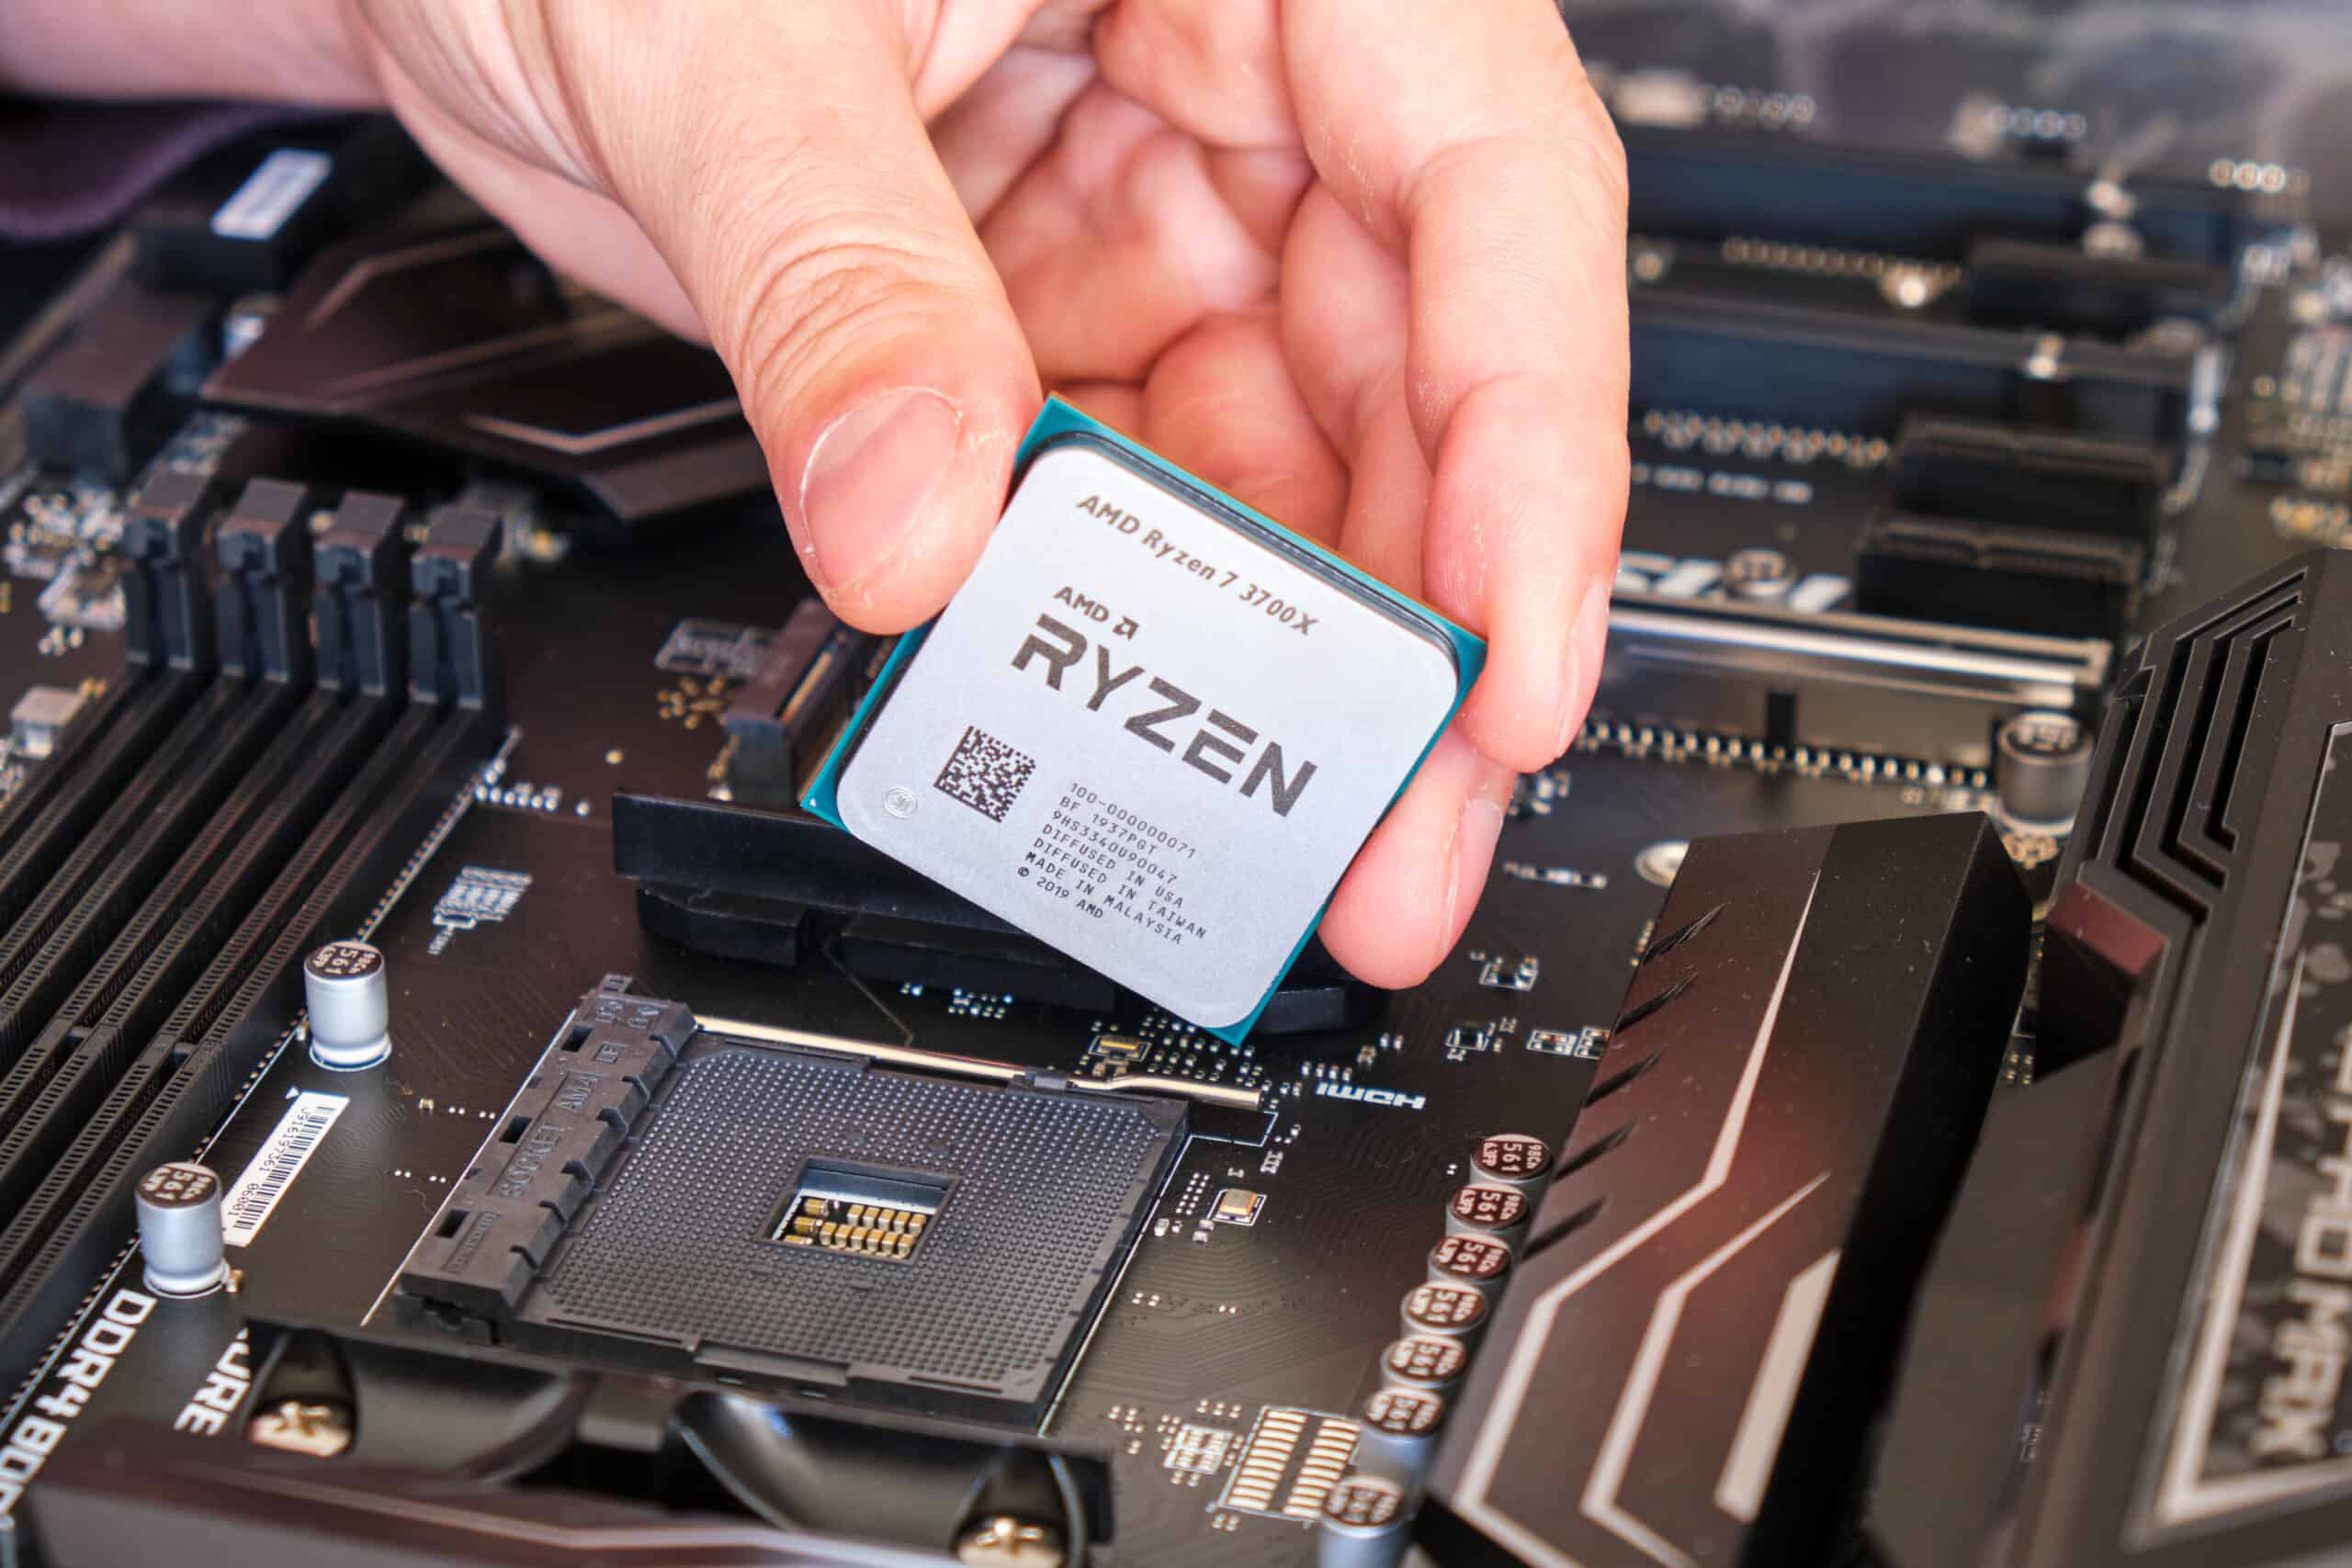 AMD Ryzen 7 5800X review: A potent octa-core desktop CPU without